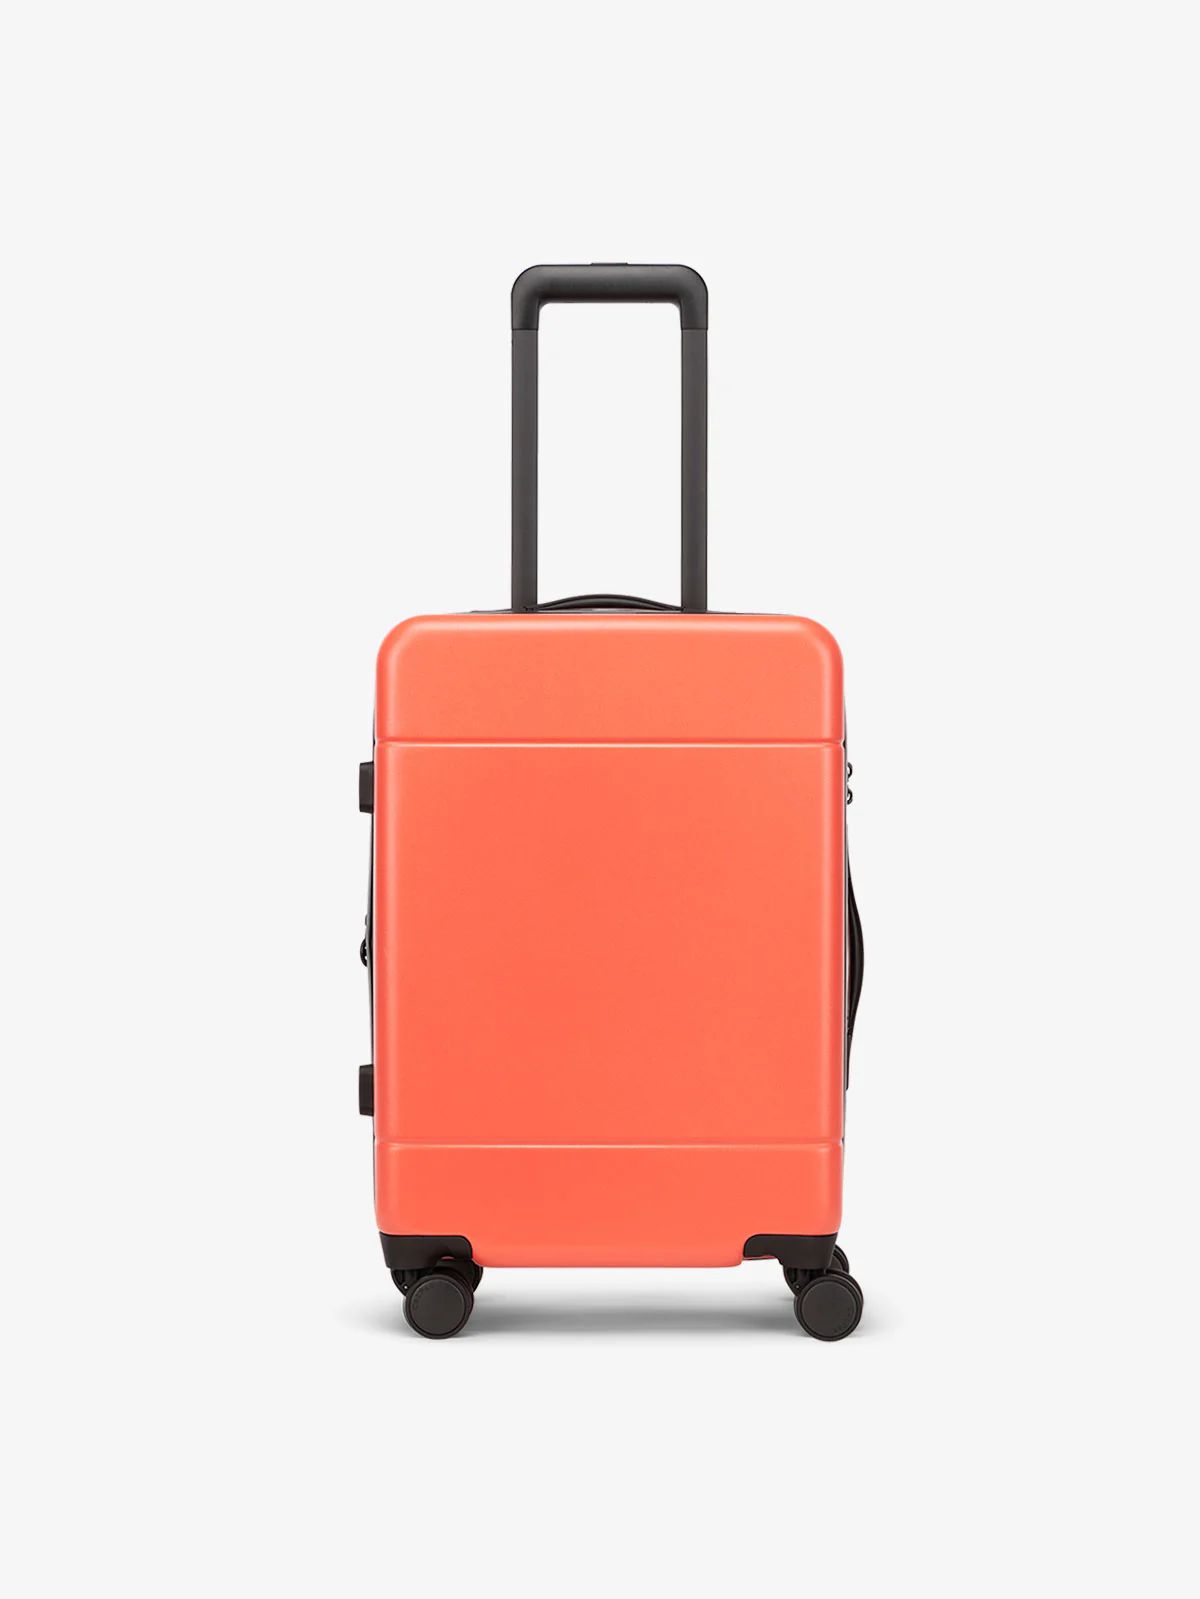 Hue Carry-On Luggage | CALPAK | CALPAK Travel